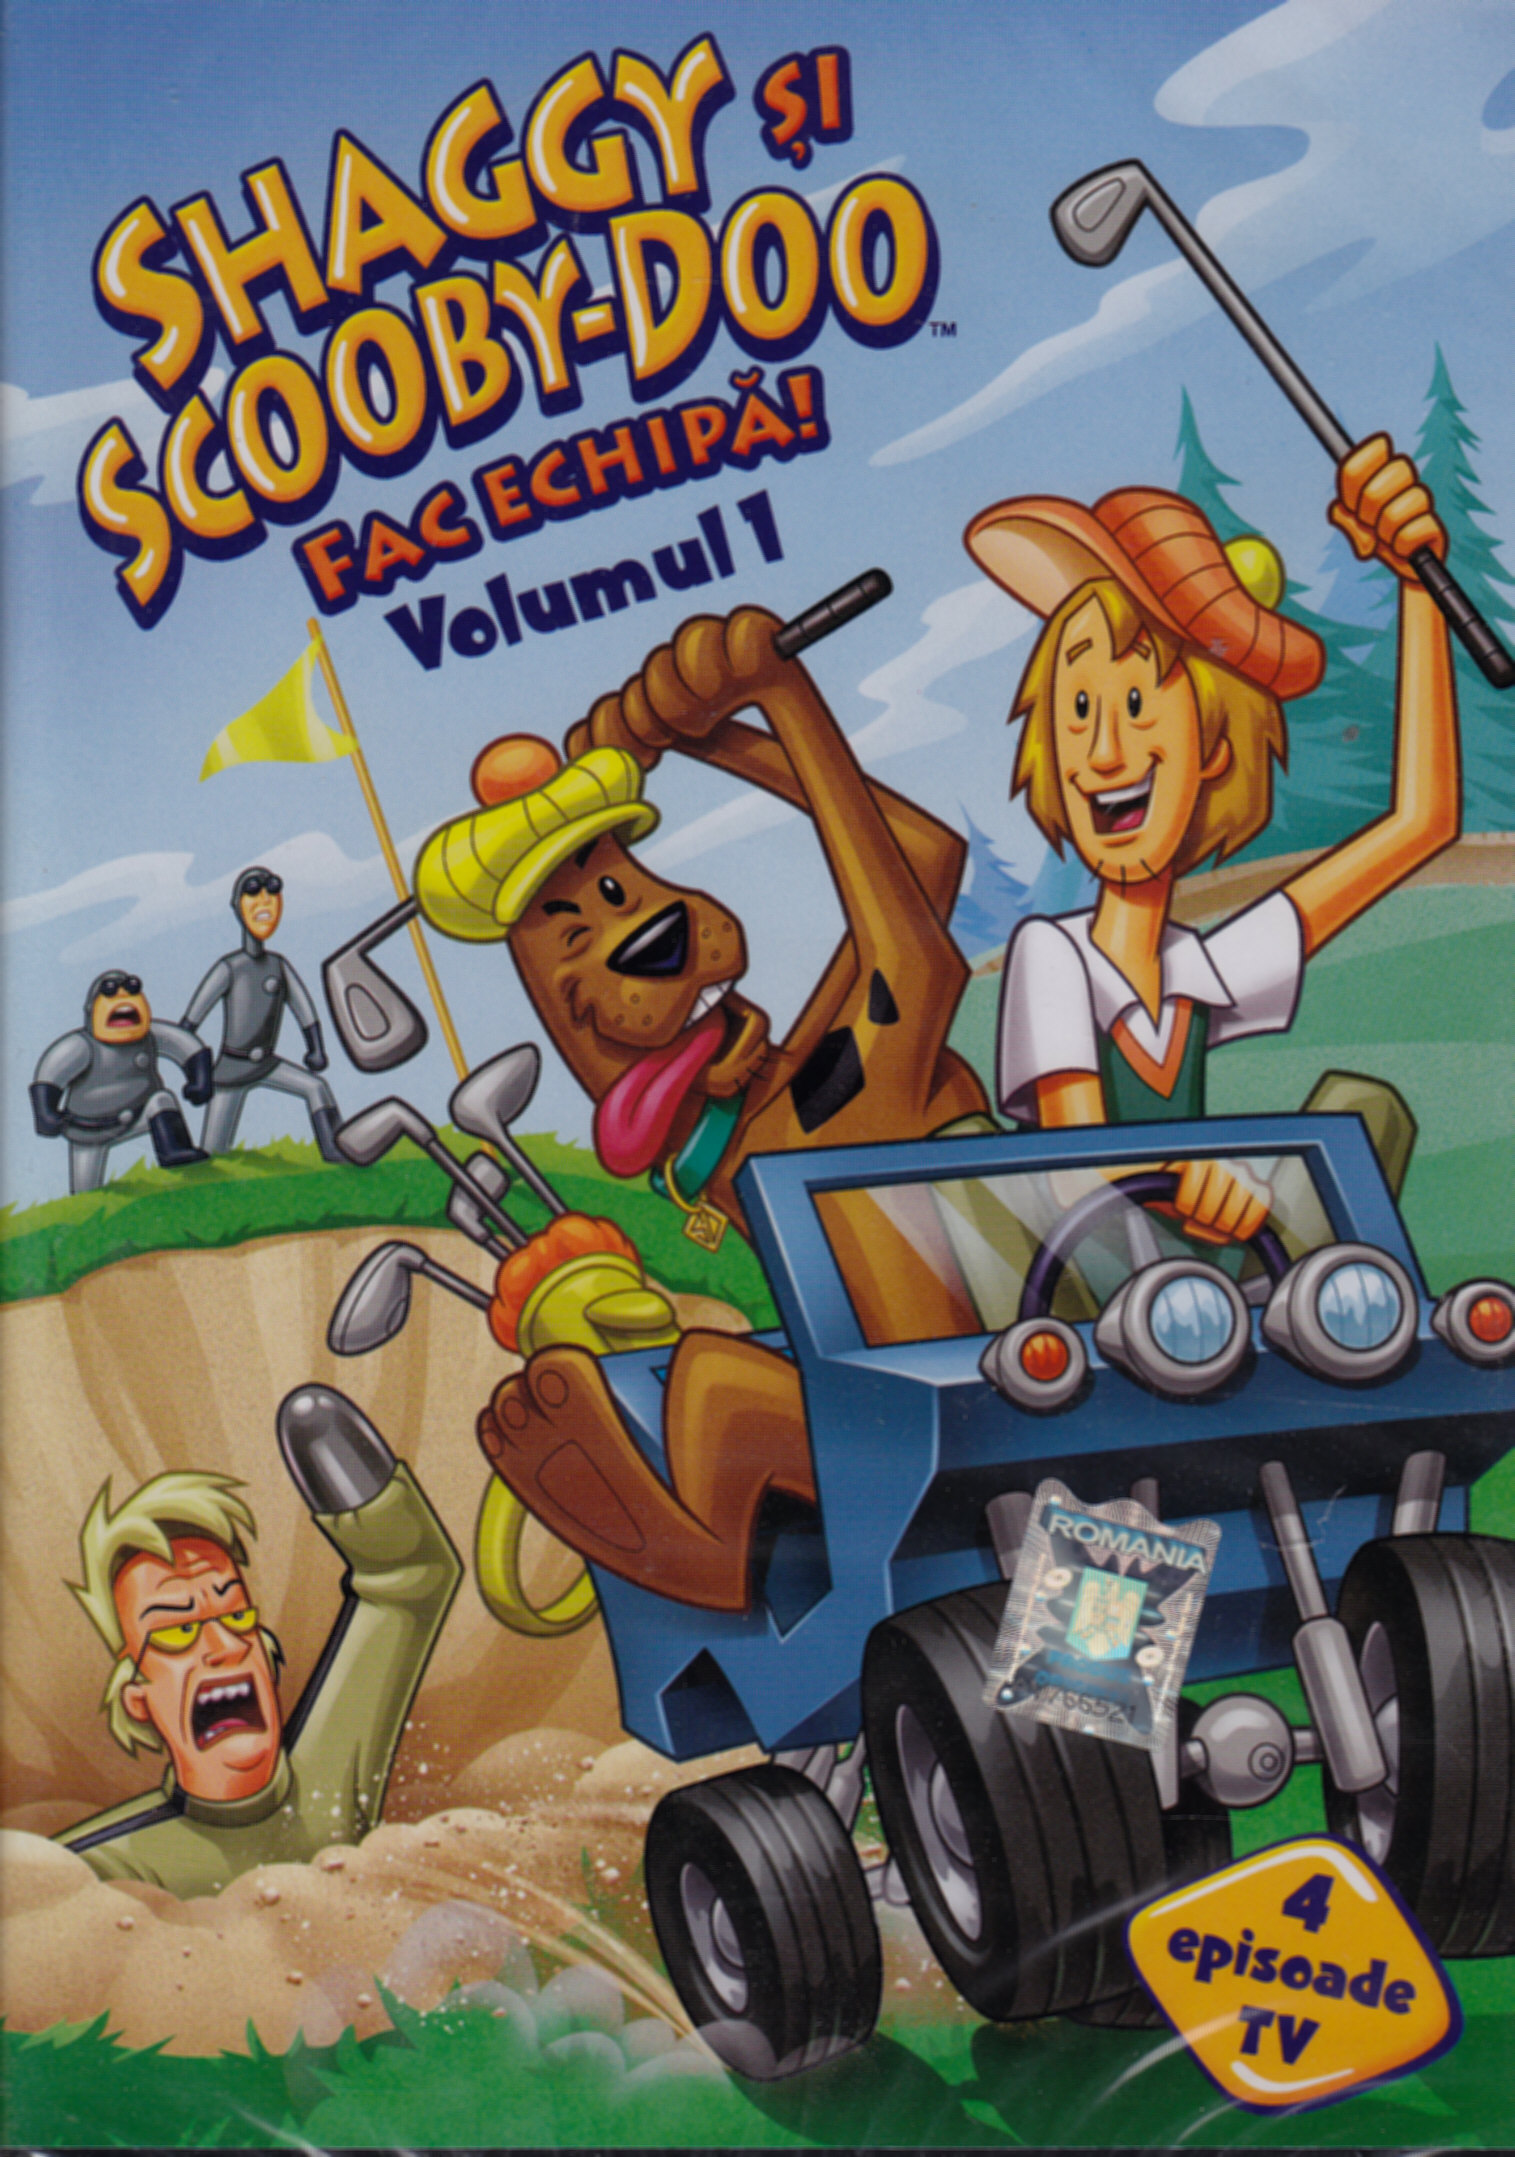 Dvd Shaggy Si Scooby-Doo Fac Echipa - Volumul 1 - 4 Episoade Tv